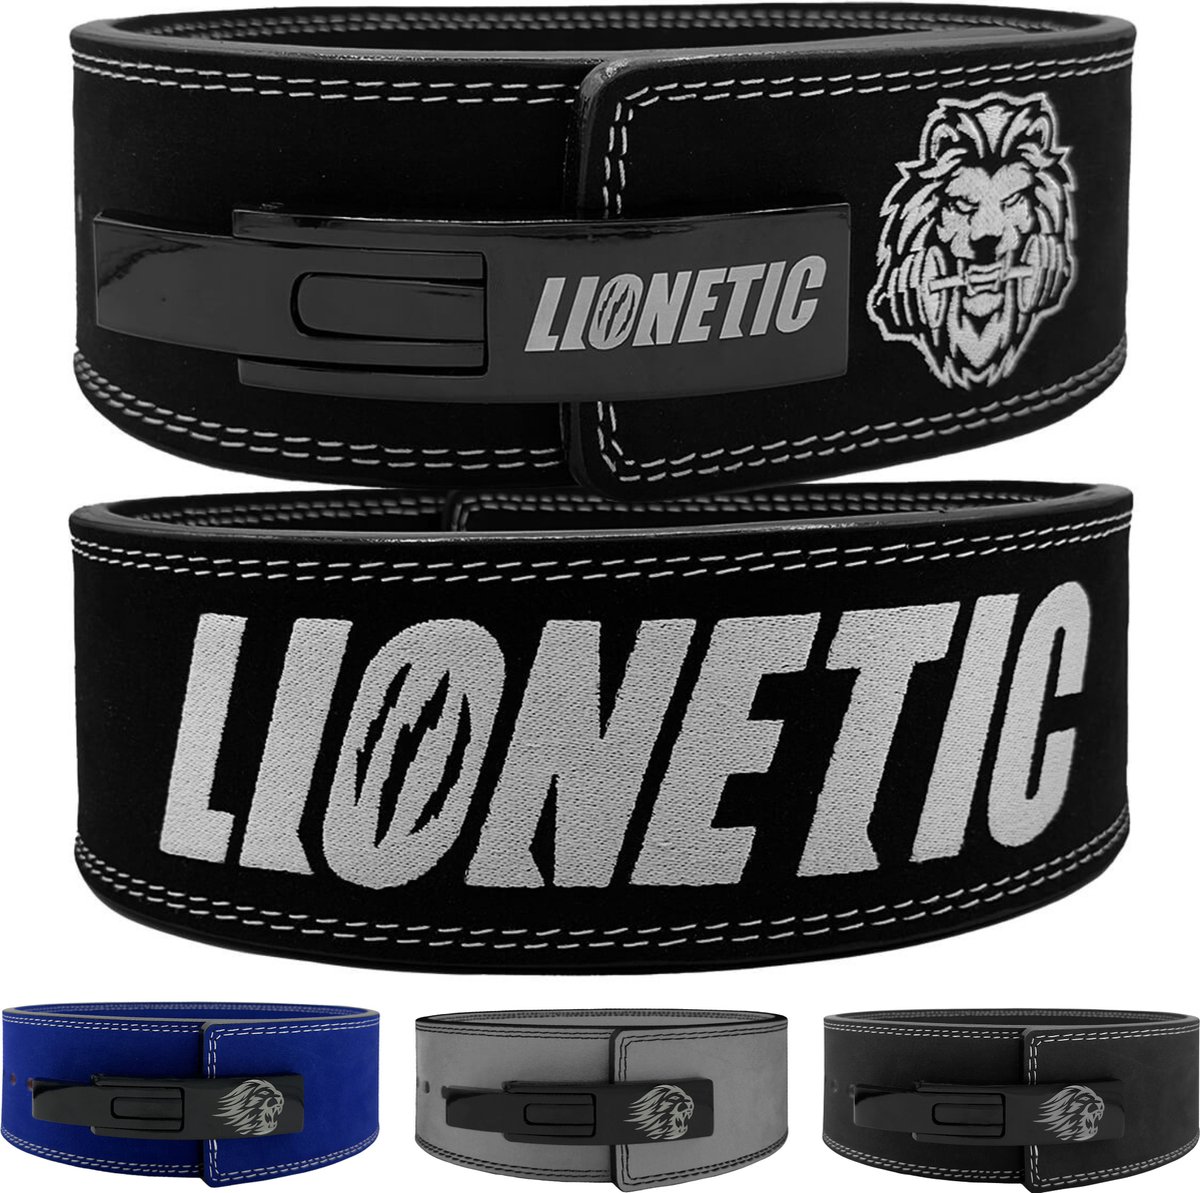 Lionetic Lifting Belt - Powerlifting Lever Belt - Powerliftig Riem - Halterriem - Lever Belt - Powerlifting/Bodybuilding - Krachttraining Accessoires – Lionetic Evolution – L